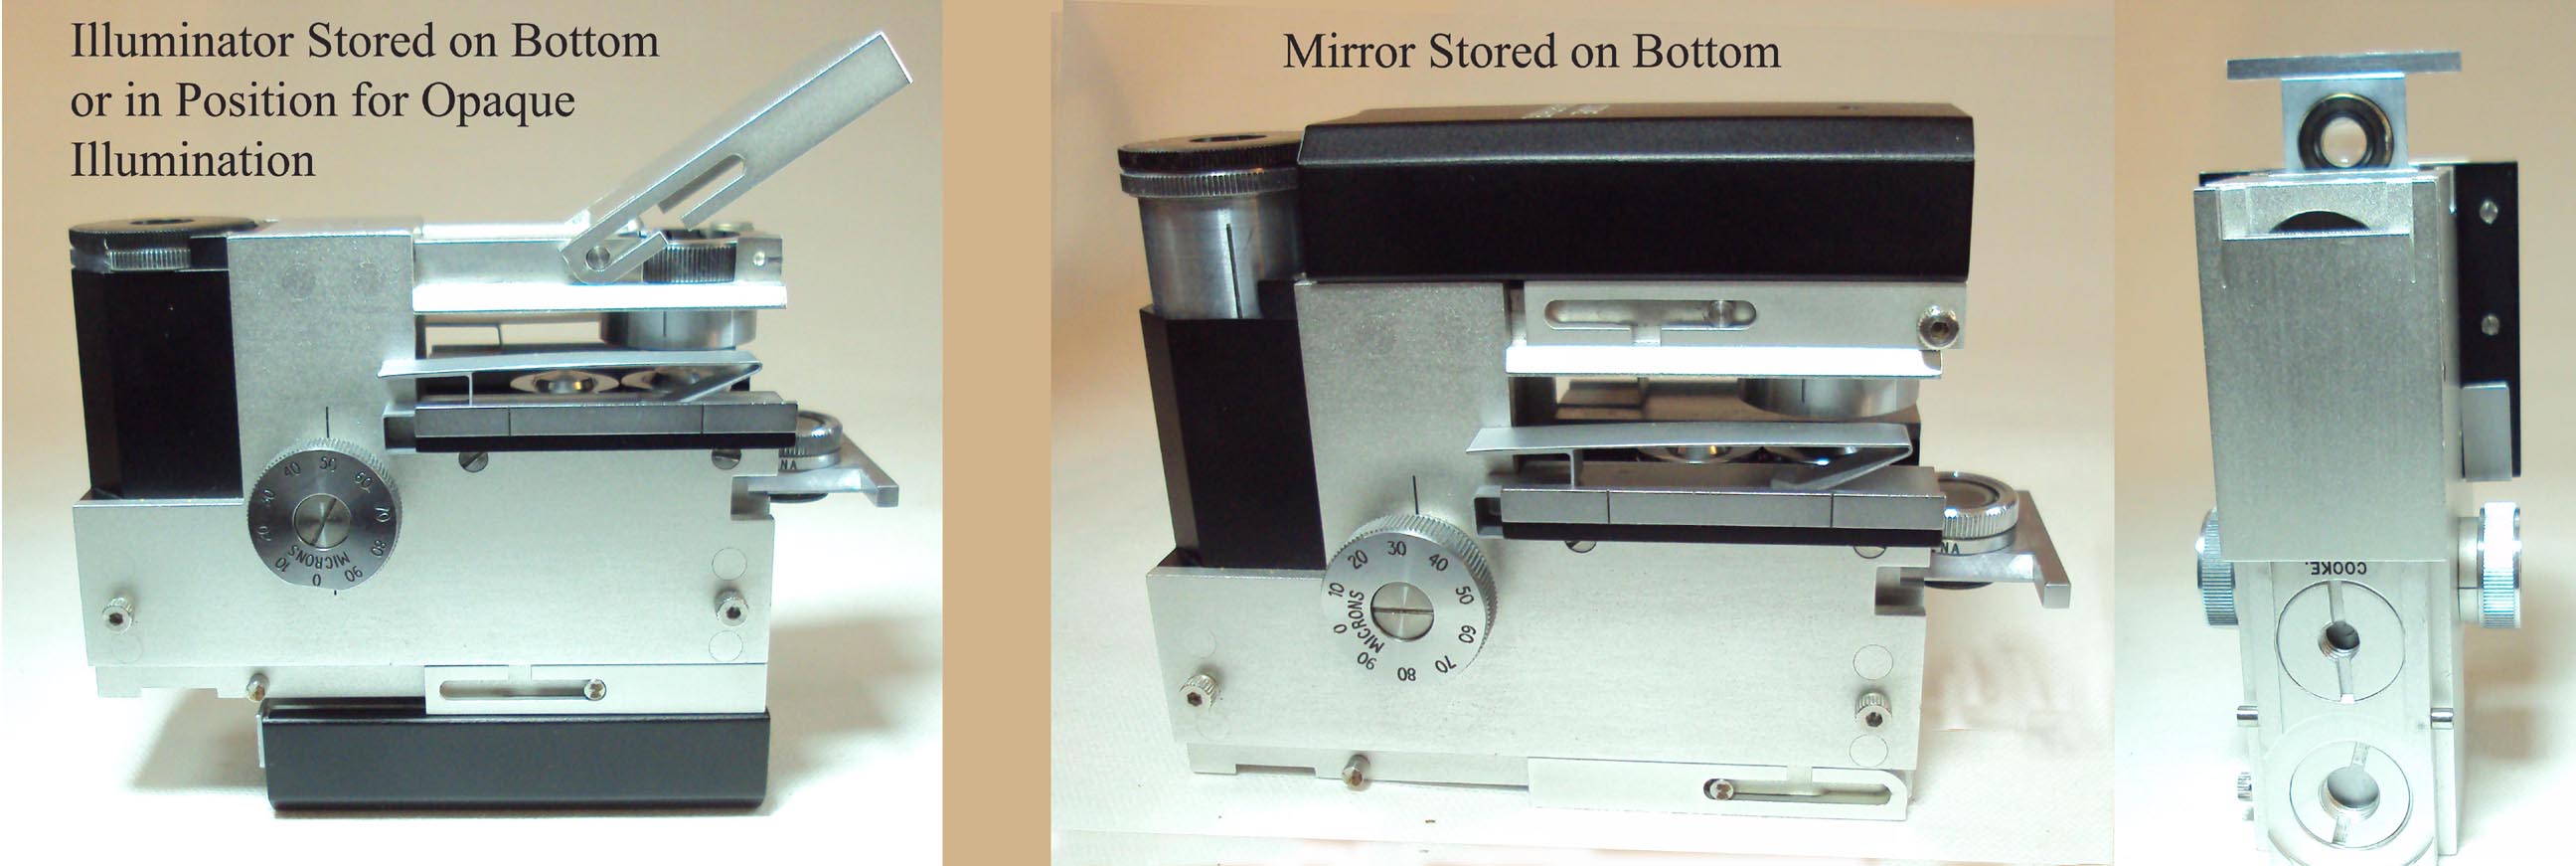 Views of attachement of mirror or illuminator to bottom footplate of McArthur Microscope